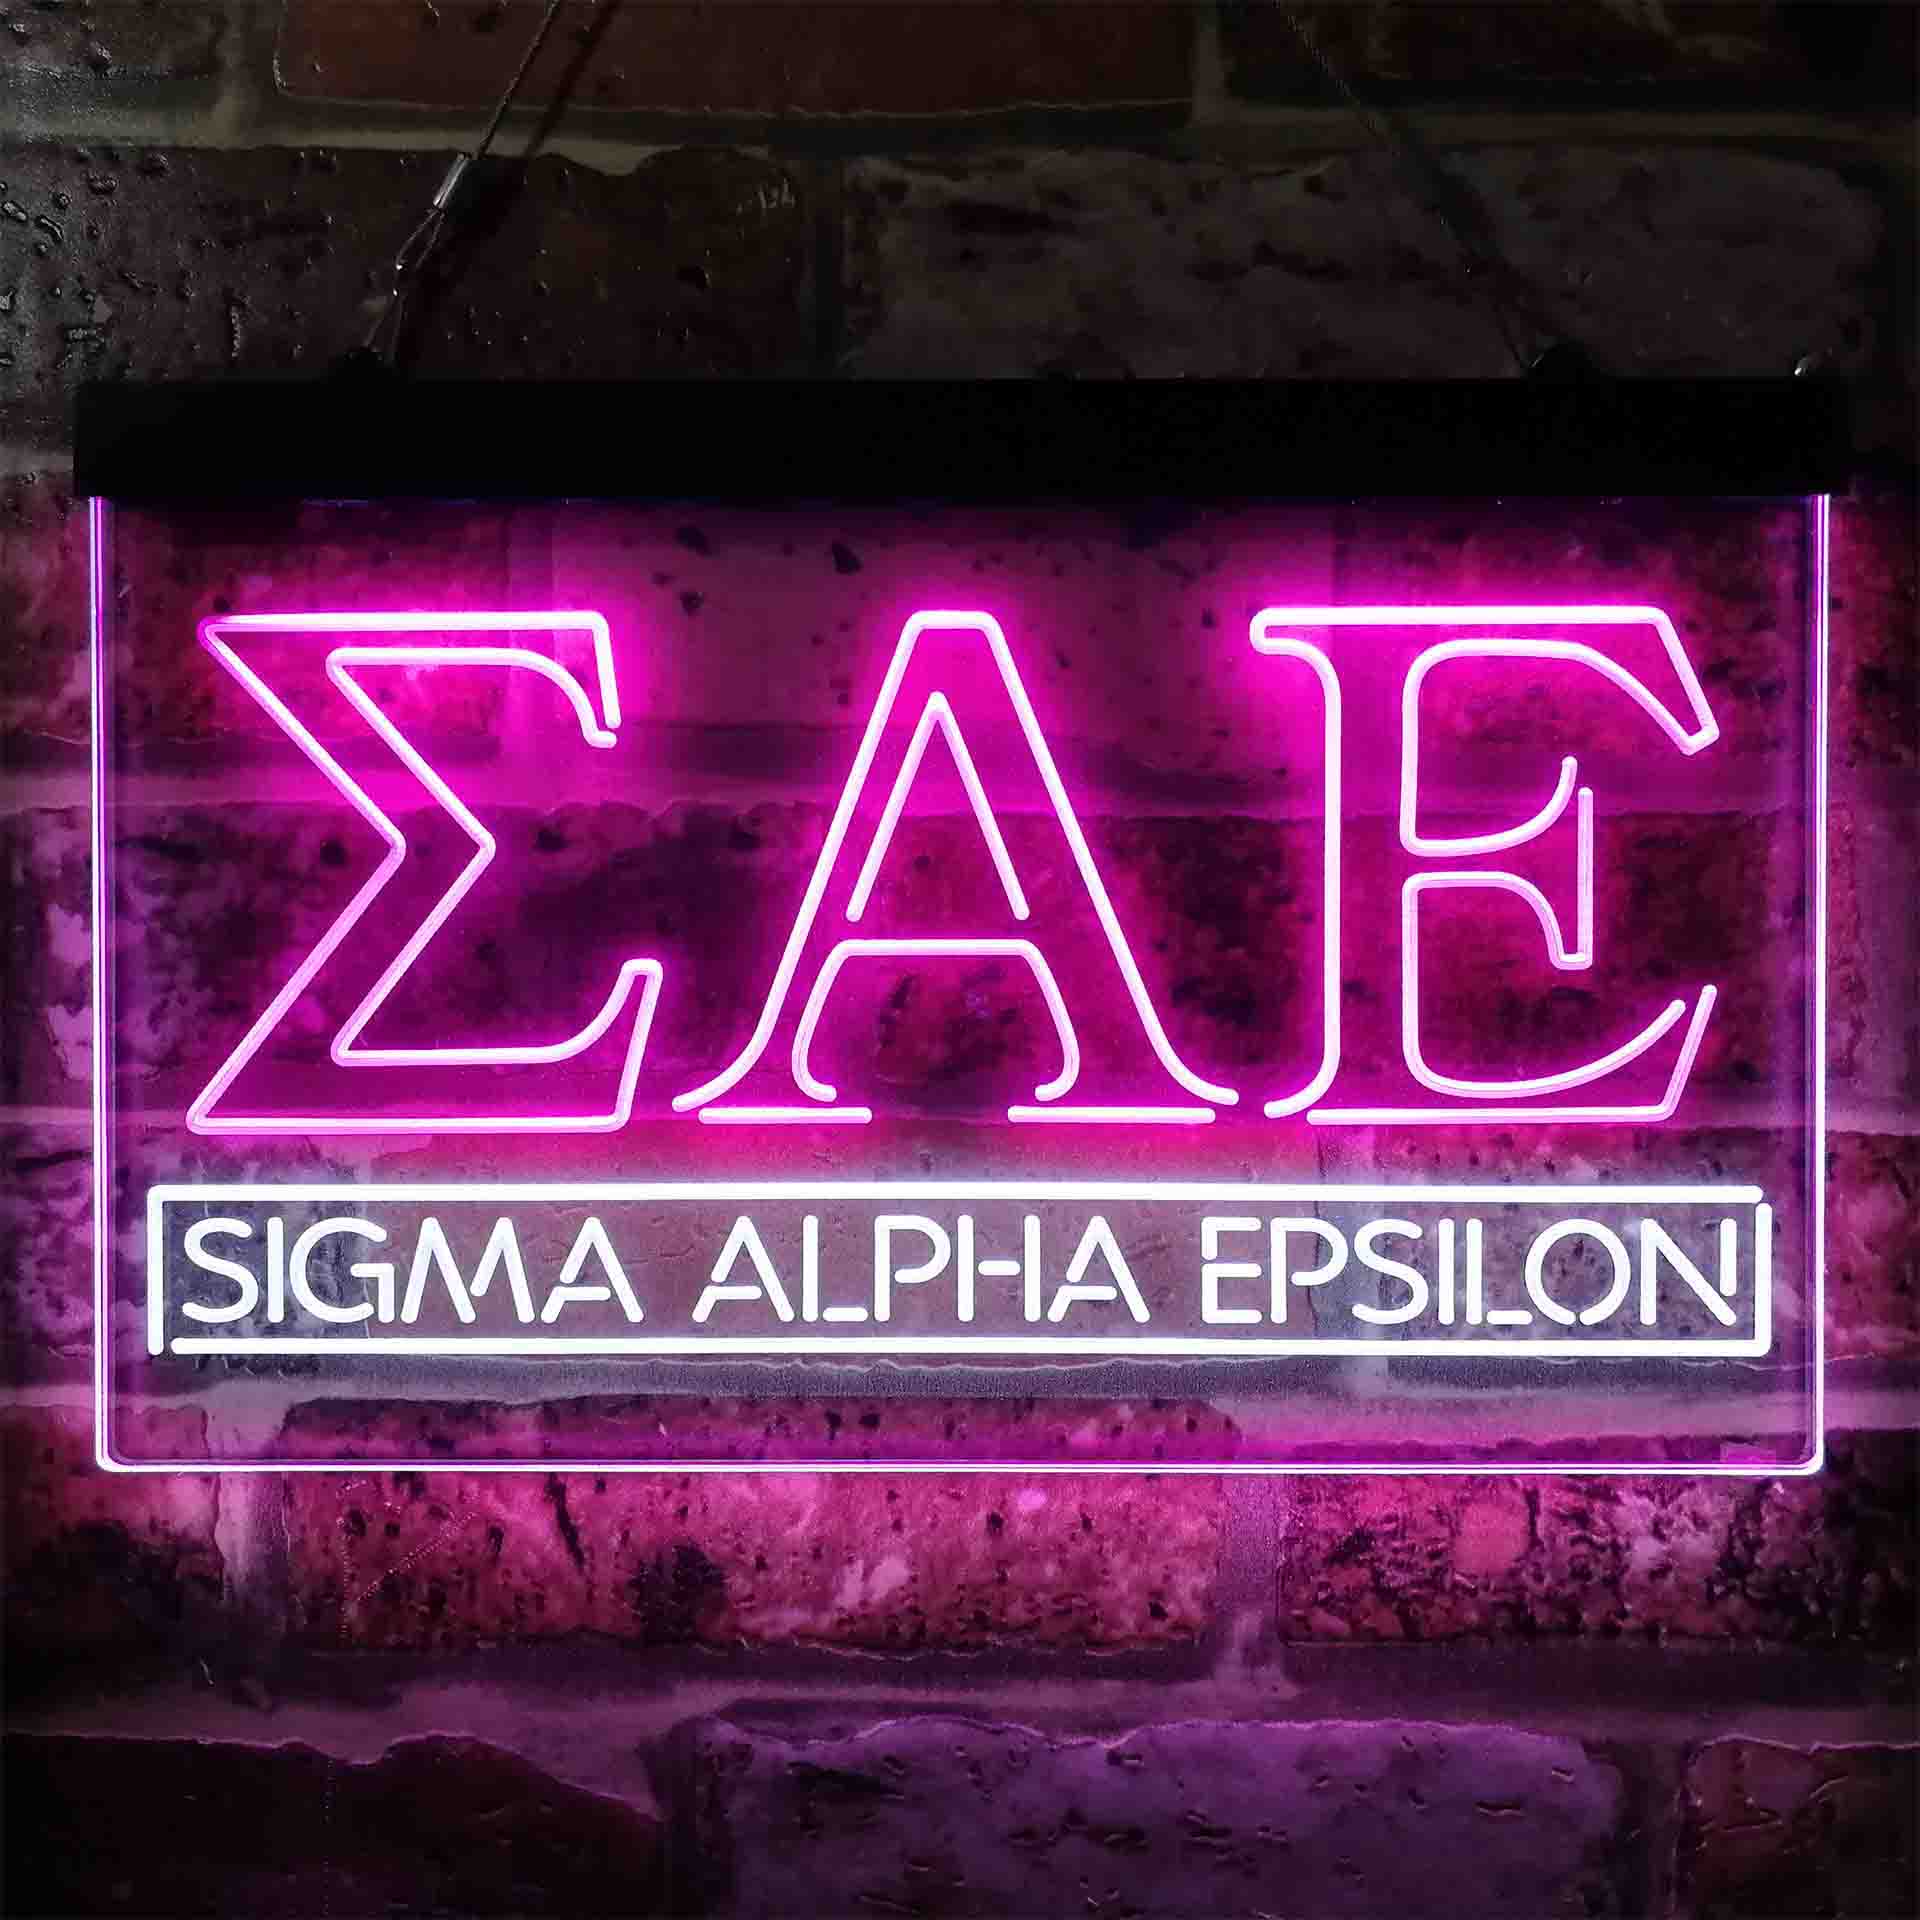 Sigma Alpha Epsilon Fraternity Greek Letter Organization Neon-Like LED Sign